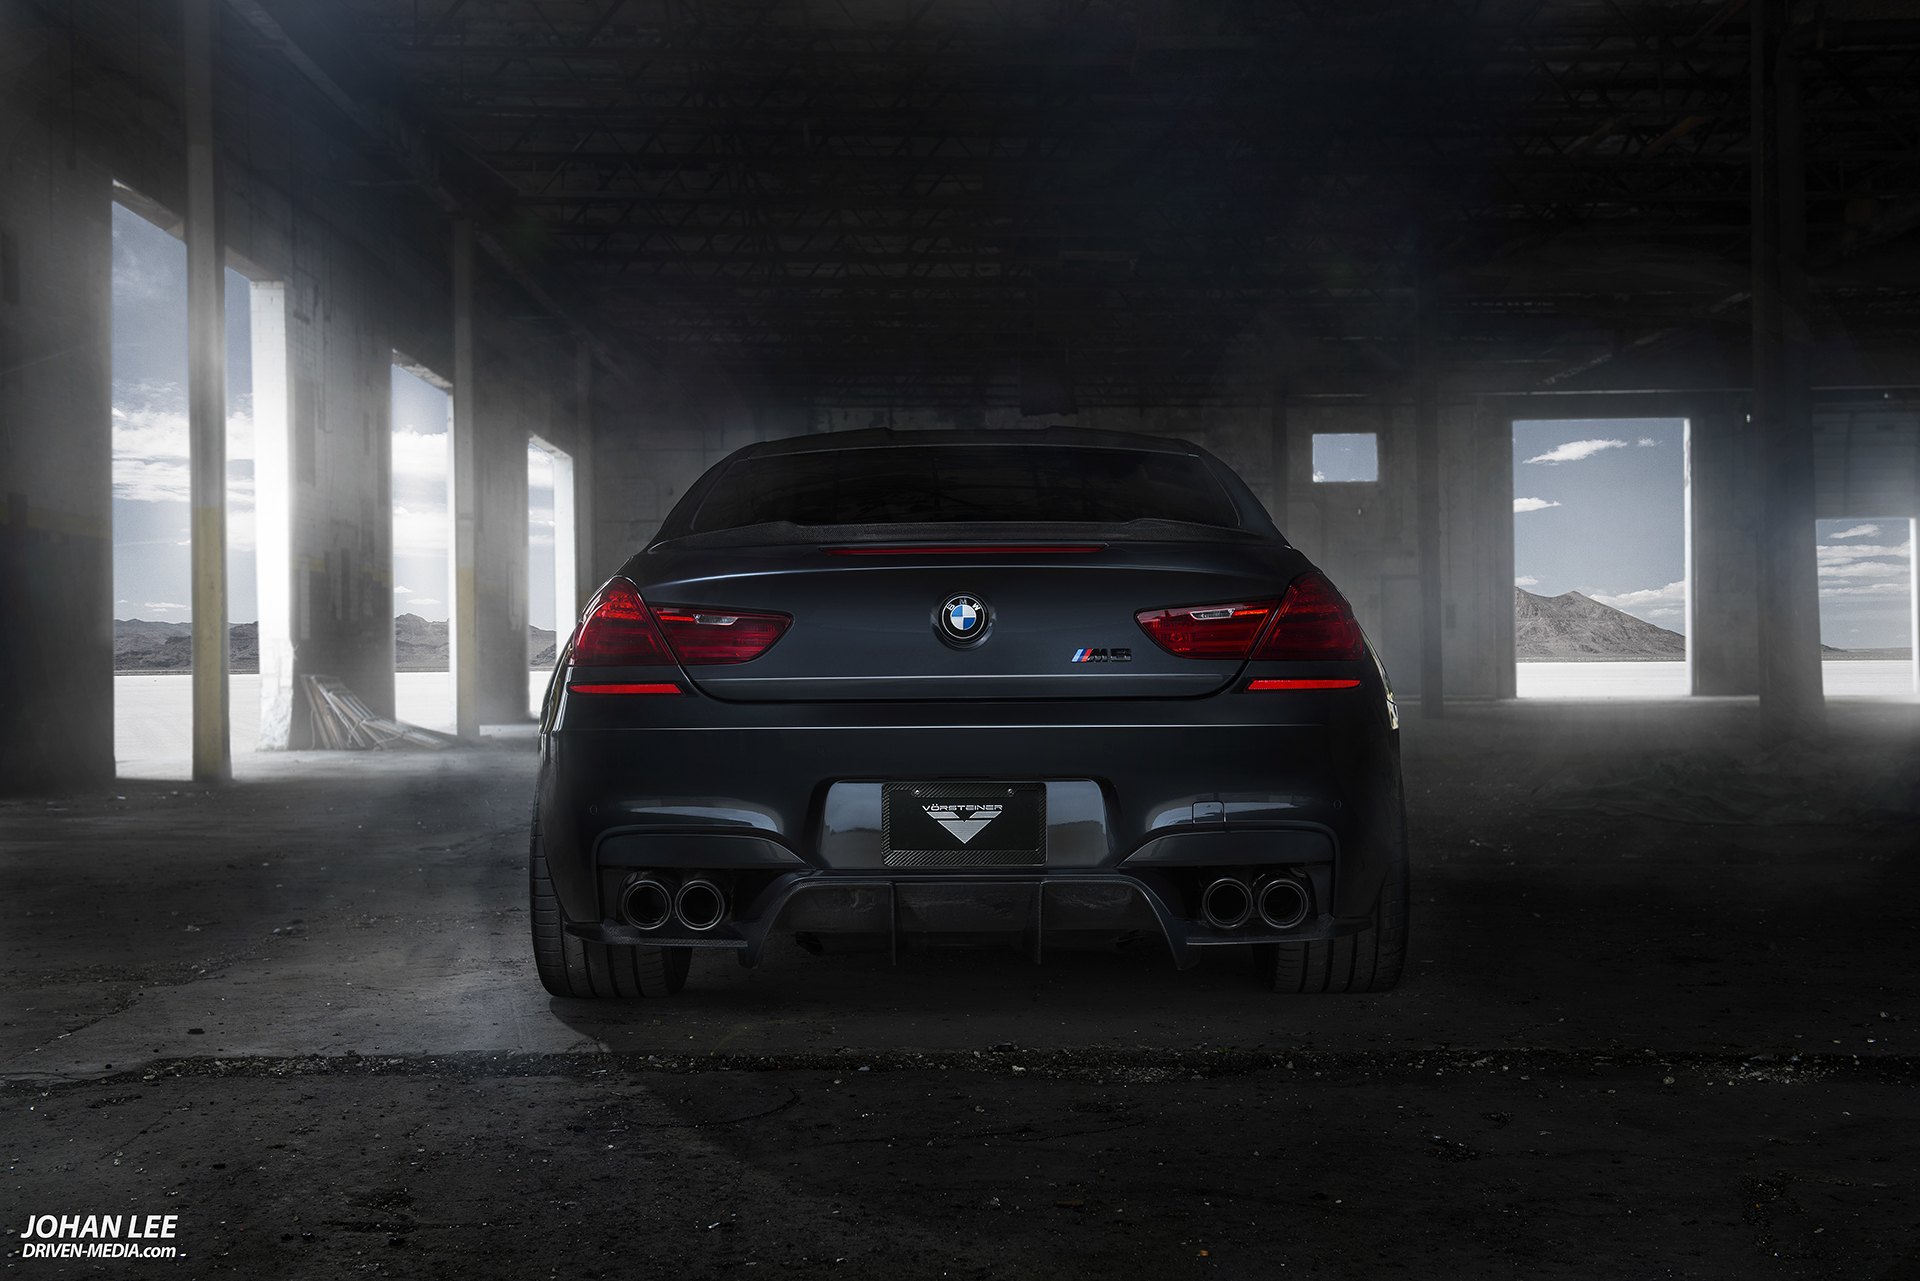 Carbon Fiber Rear Diffuser on Black BMW 6-Series - Photo by Johan Lee